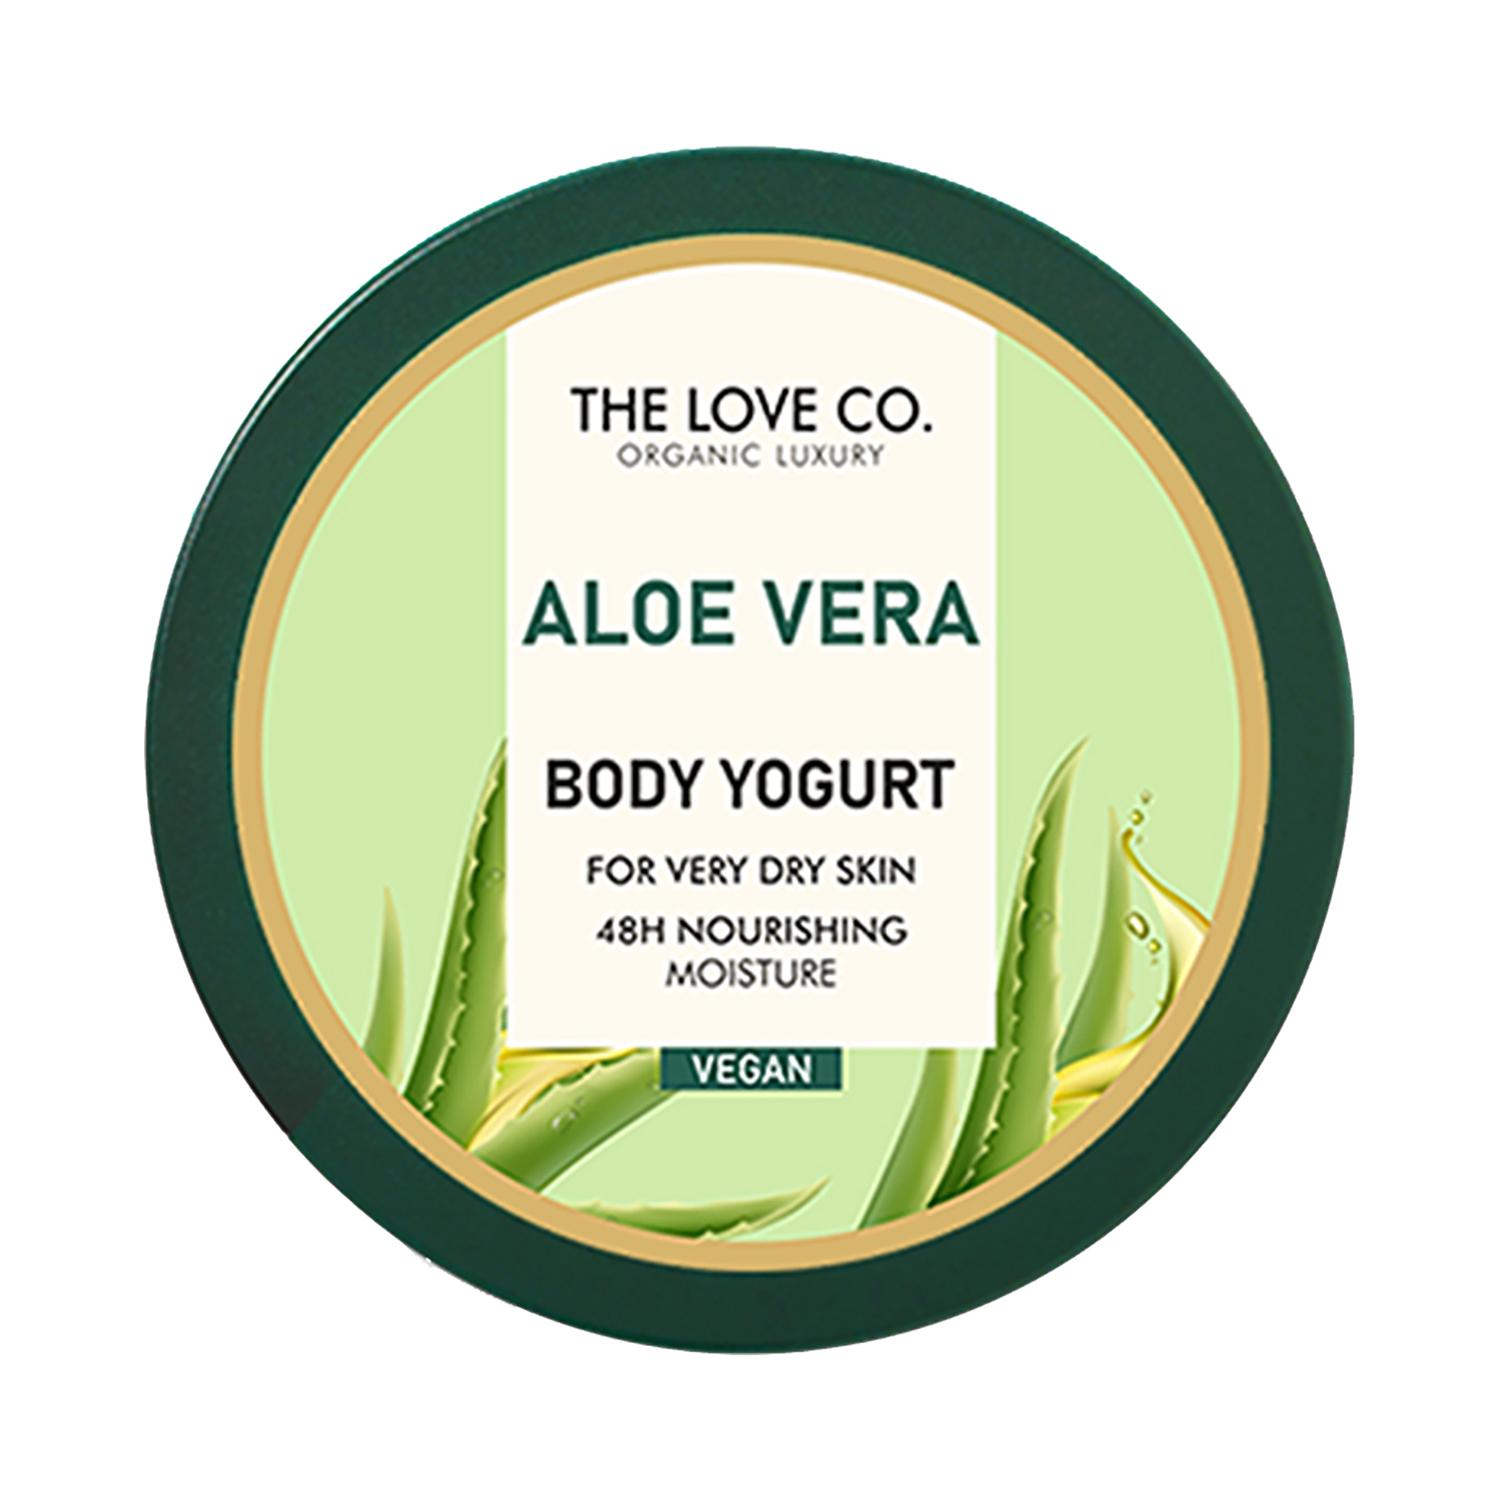 THE LOVE CO. | THE LOVE CO. Aloe Vera Body Yogurt Deep Moisturization With Pure Shea Butter (200g)